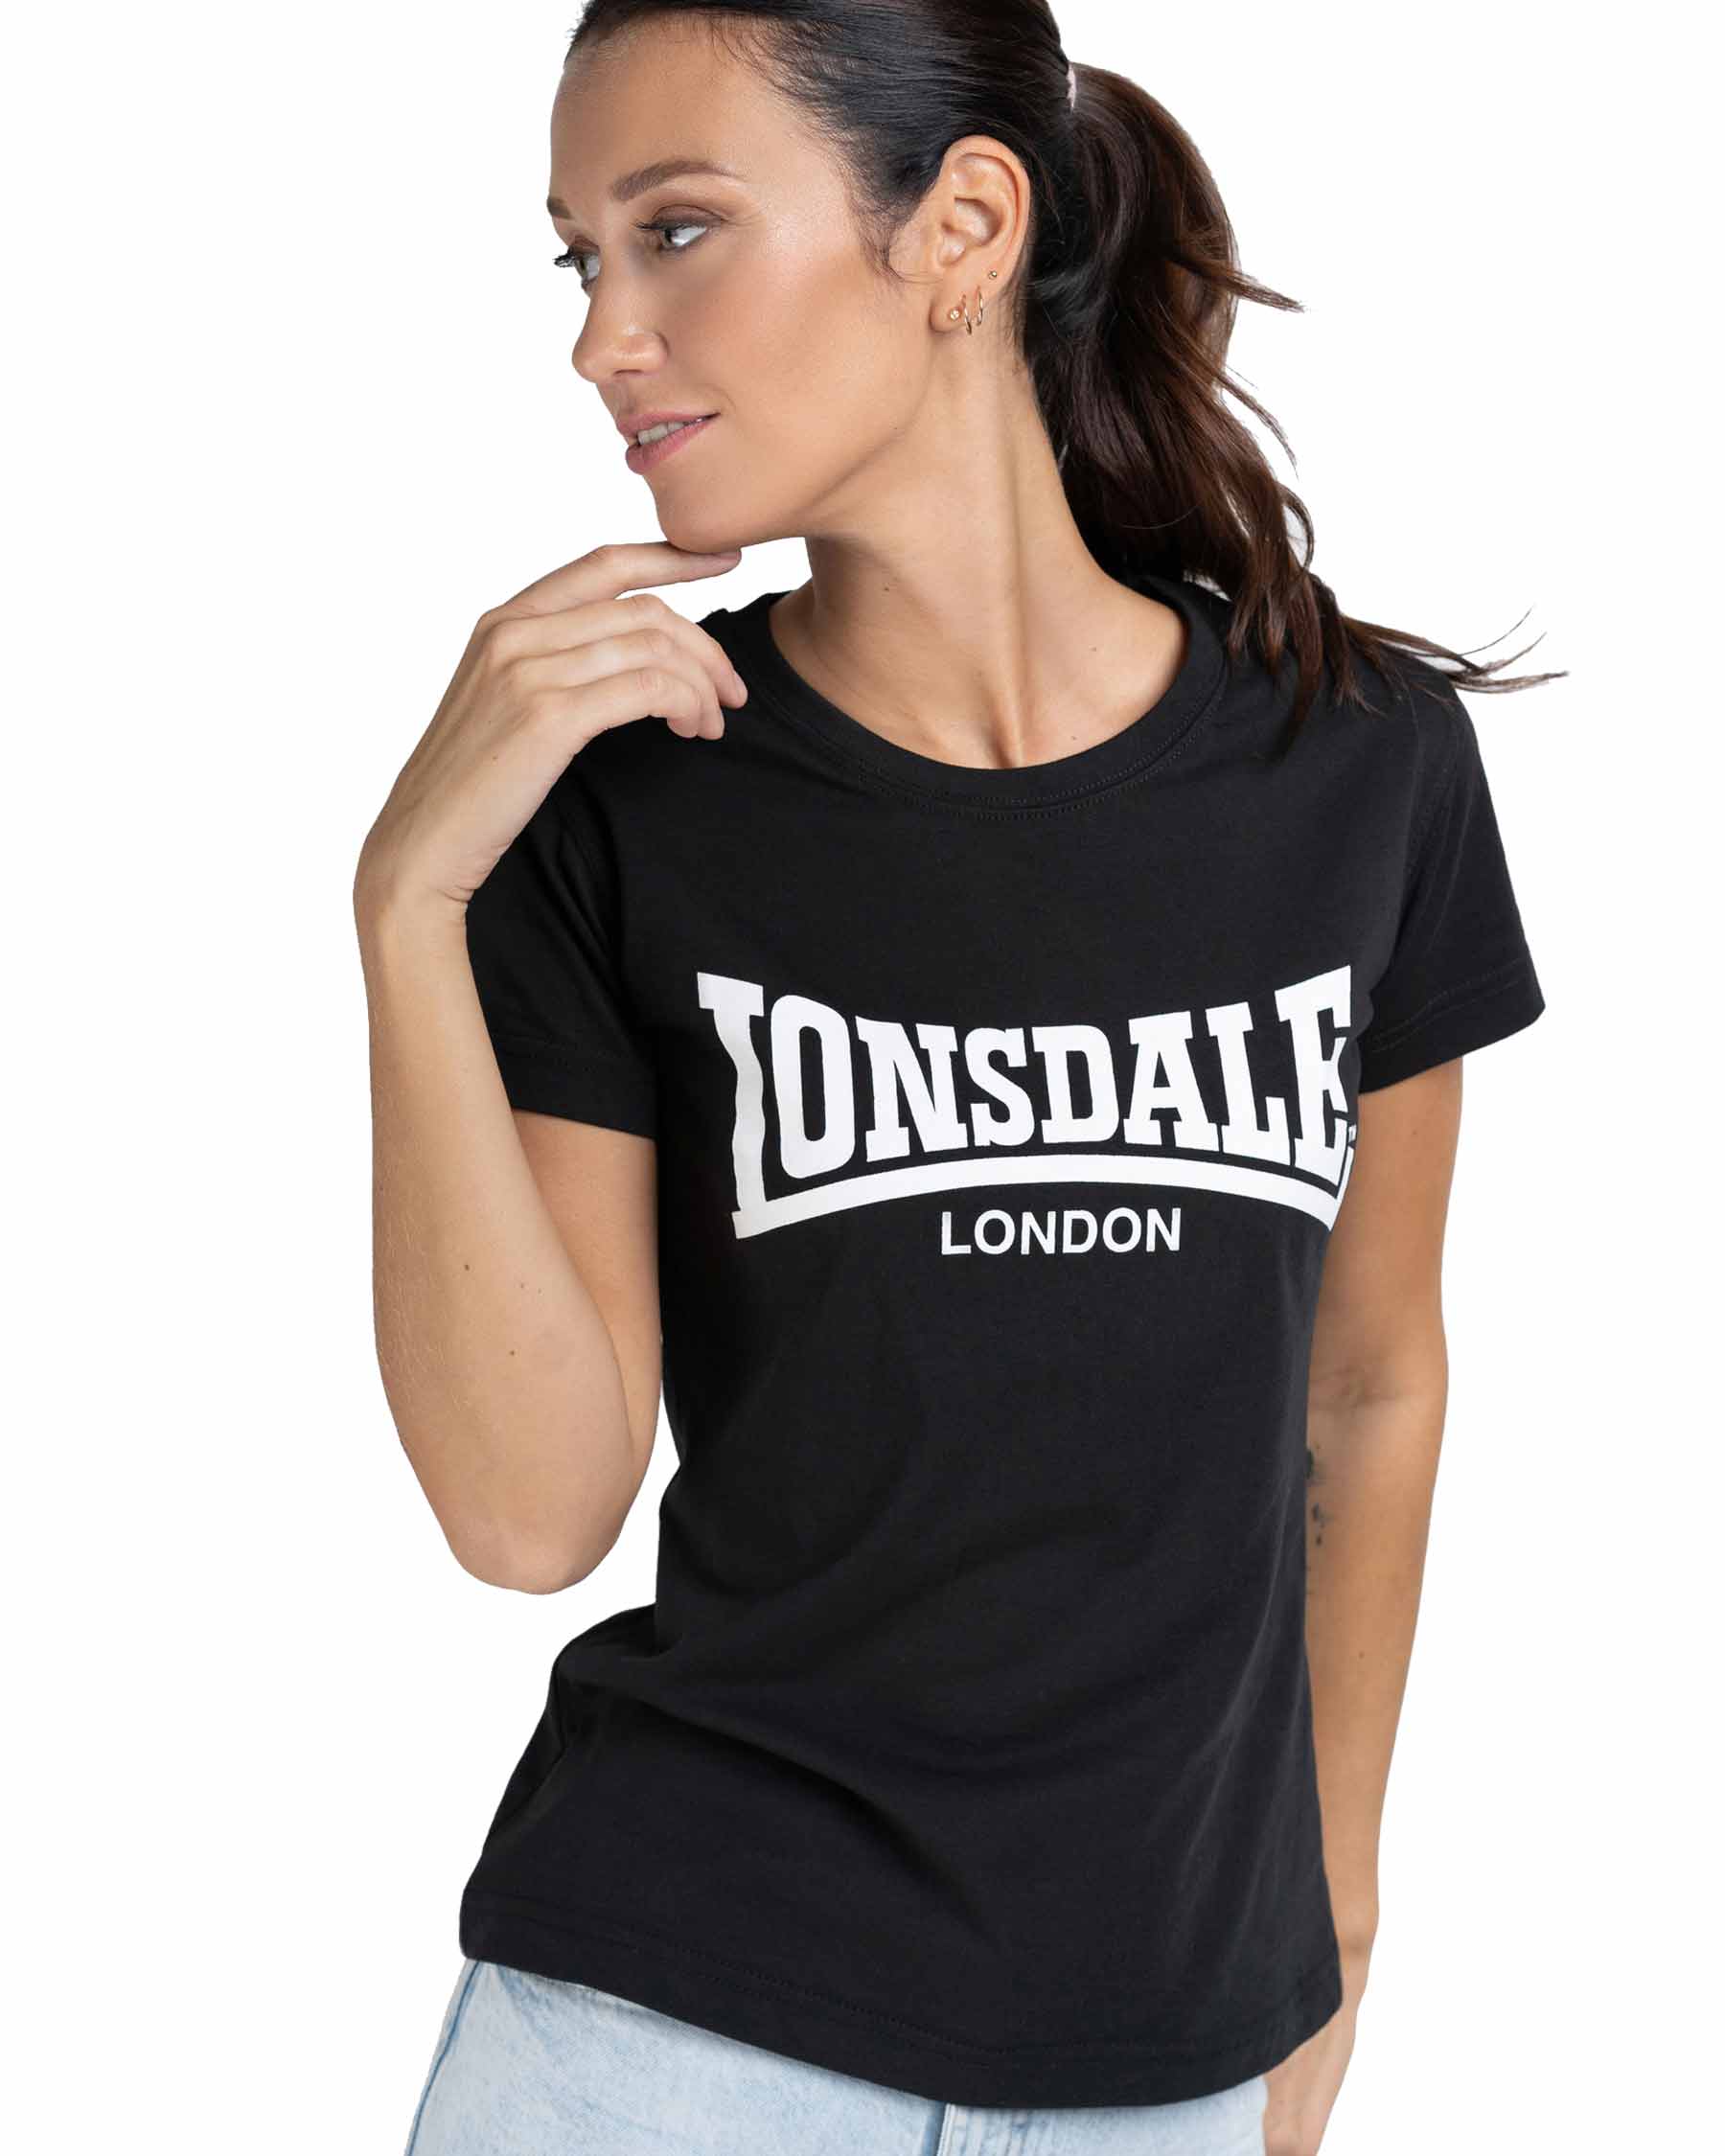 Voorlopige naam Symptomen evenwichtig Lonsdale dames t-shirt Cartmel - Dames T-Shirts - Lonsdale London